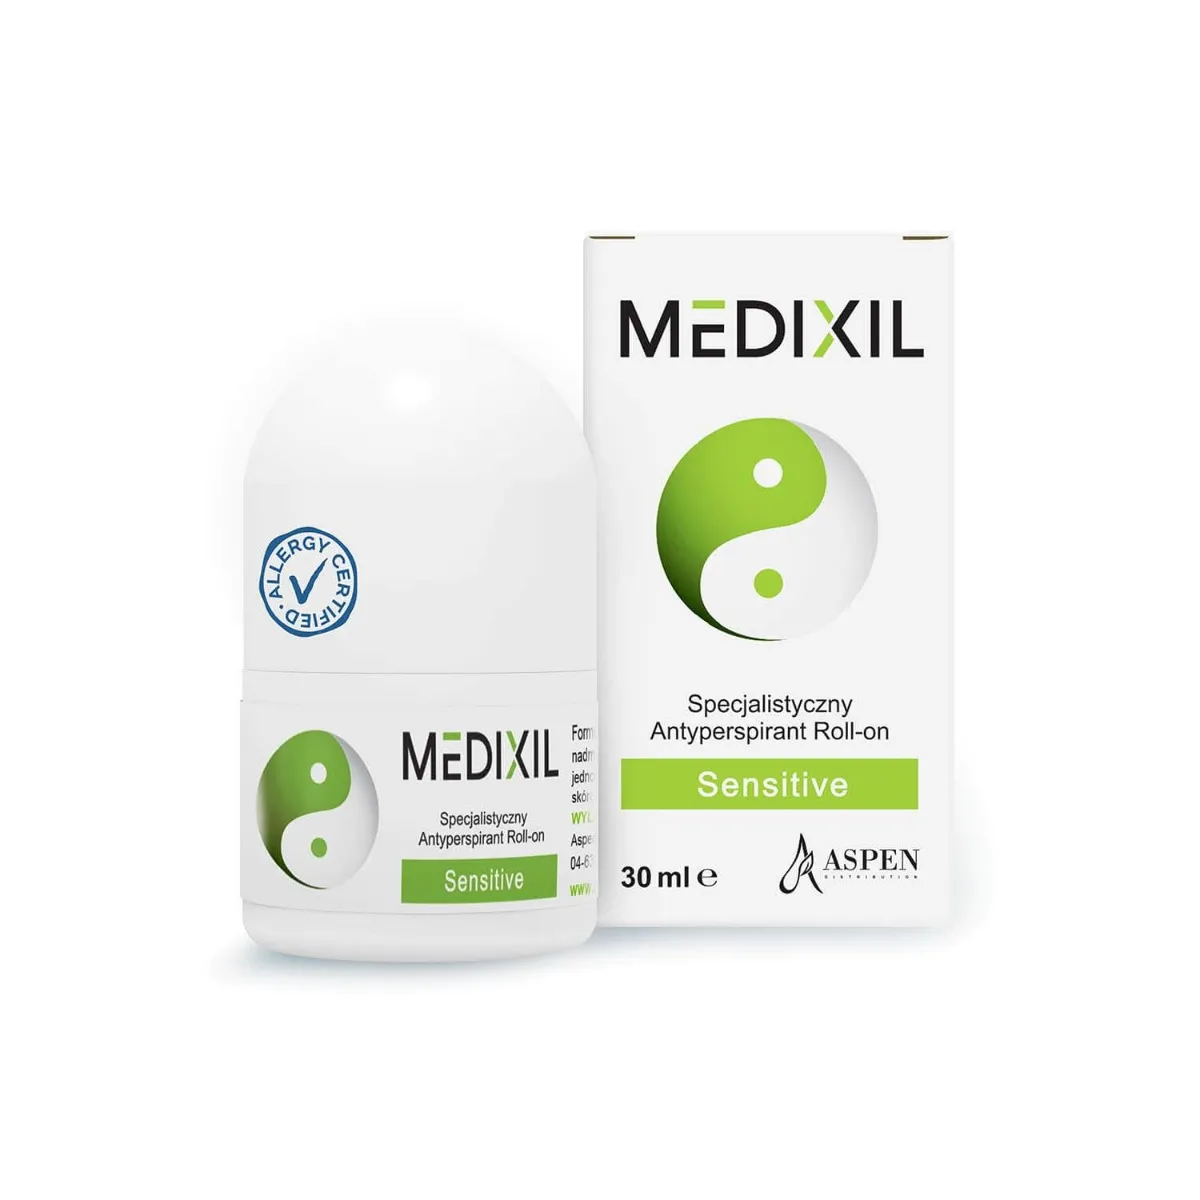 Medixil Sensitive, antyperspirant roll-on, 30 ml